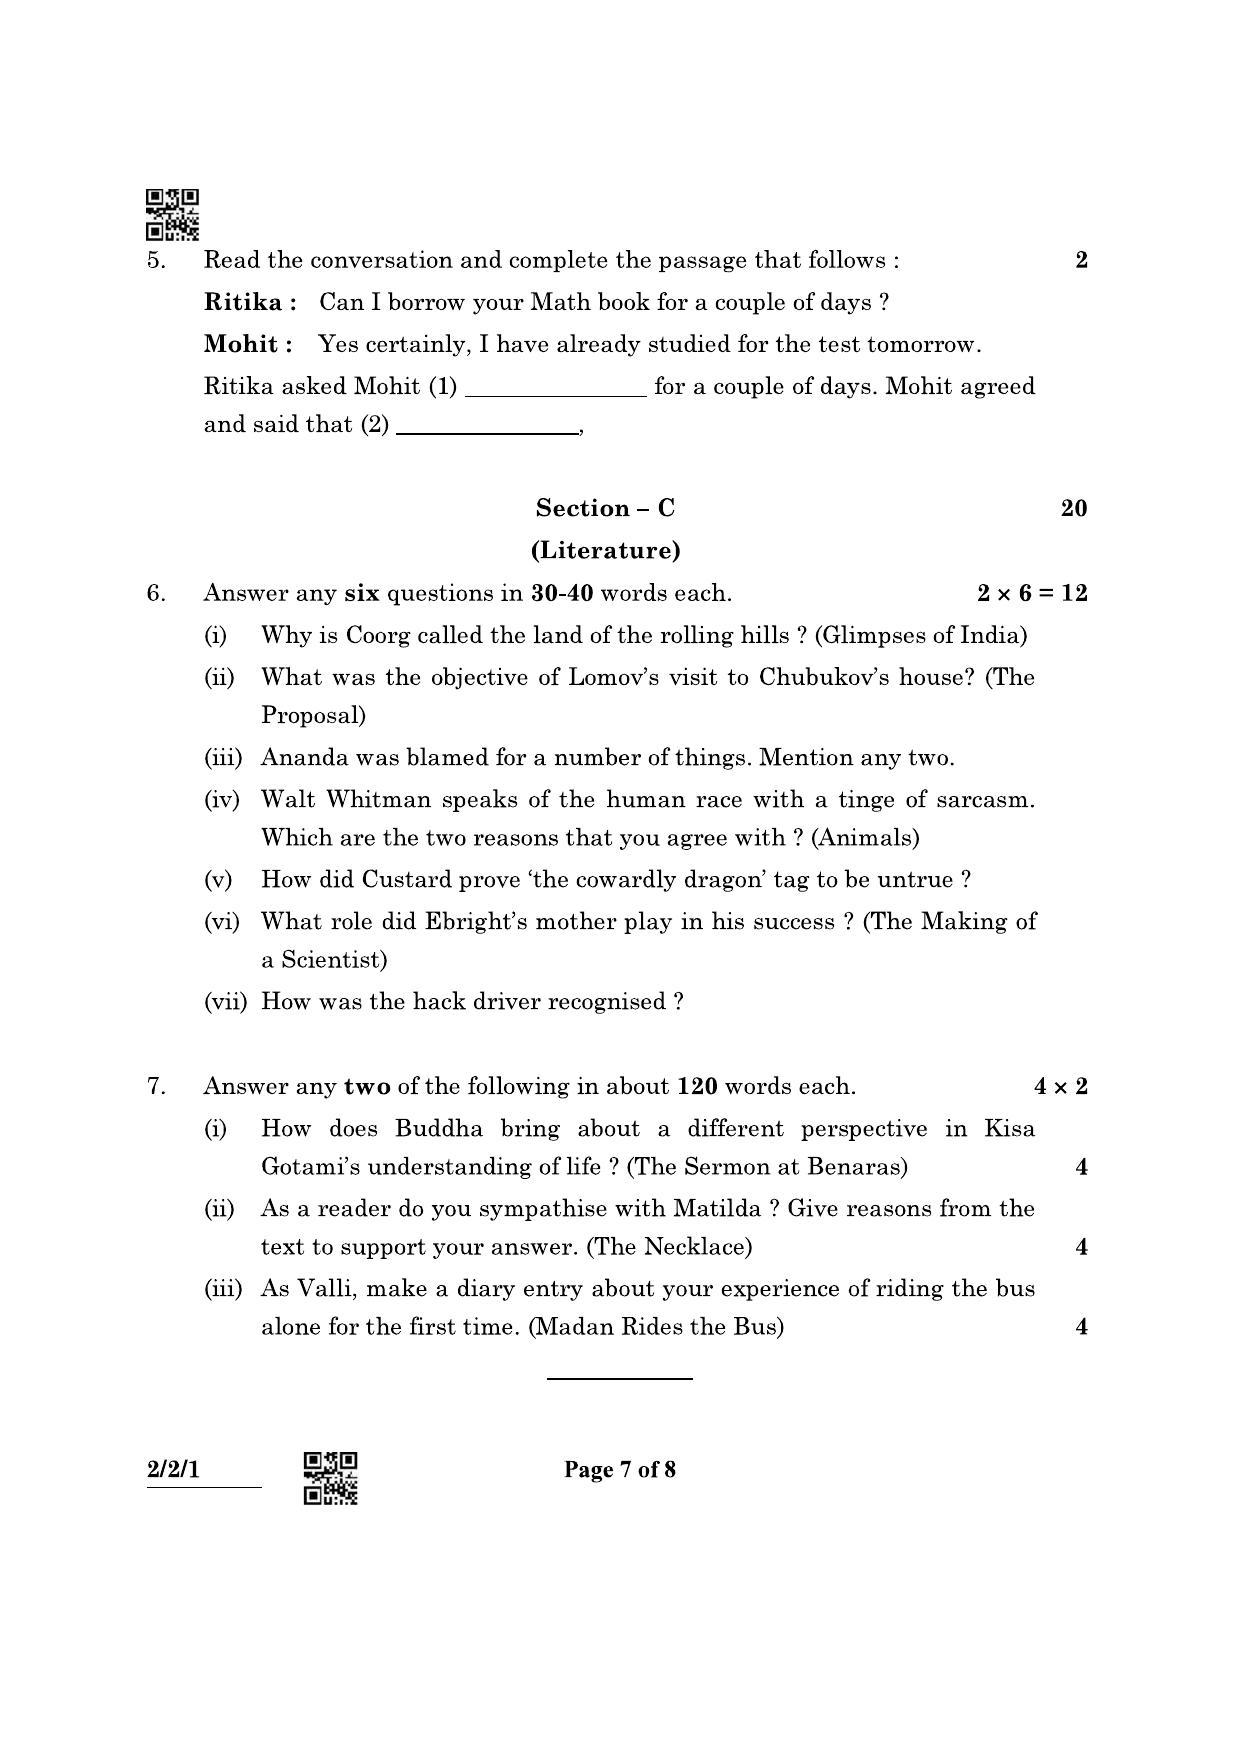 CBSE Class 10 2-2-1 (English L & L) 2022 Question Paper - Page 7